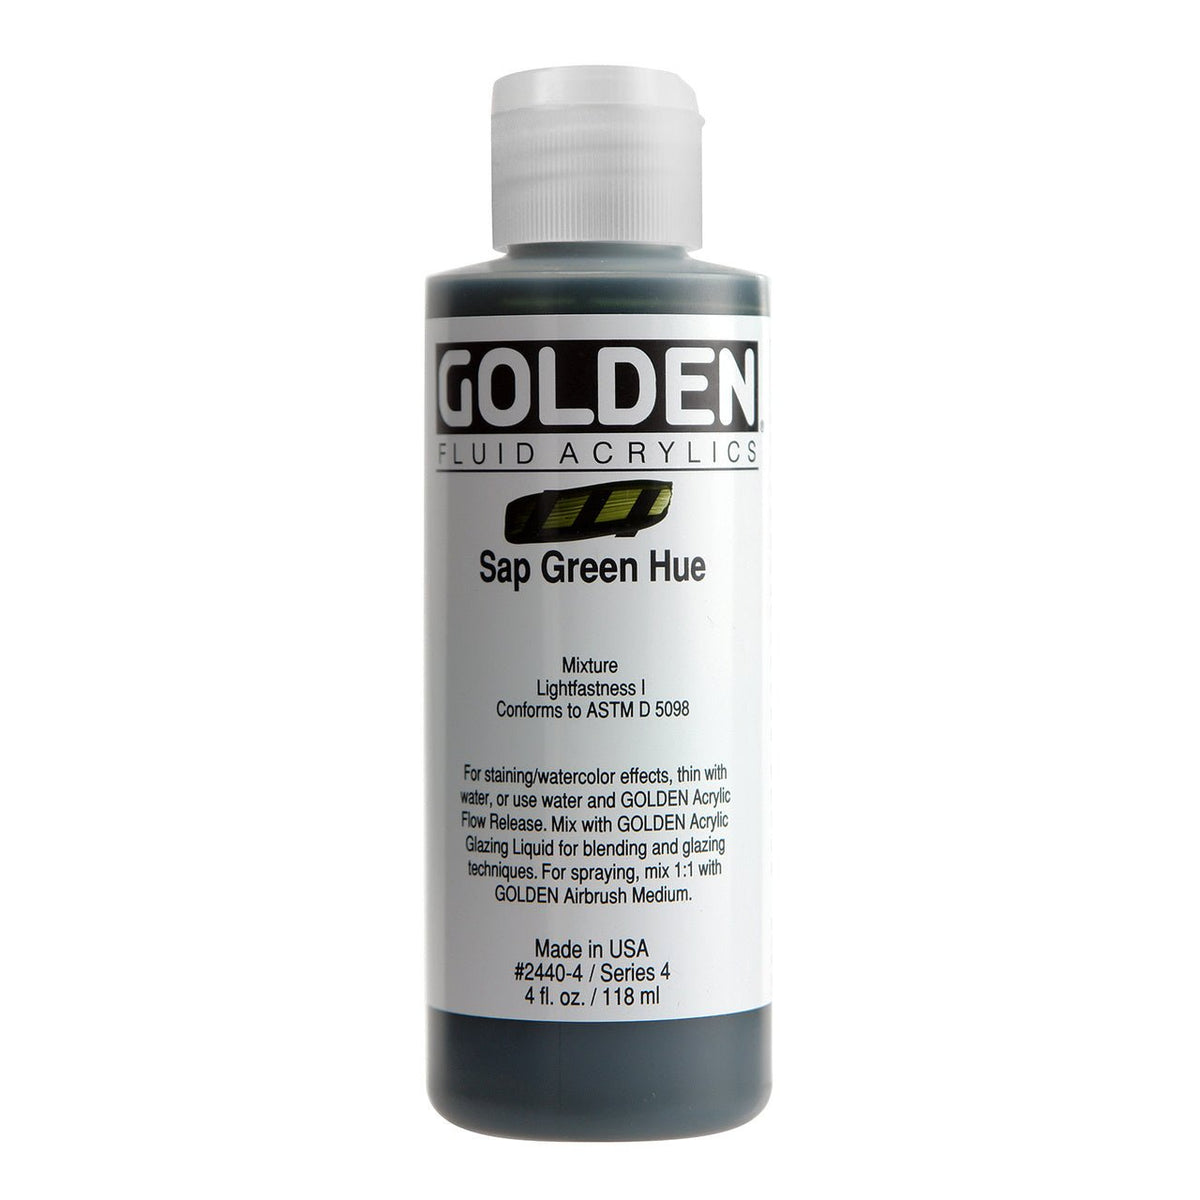 Golden Fluid Acrylic Sap Green Hue 4 oz - merriartist.com